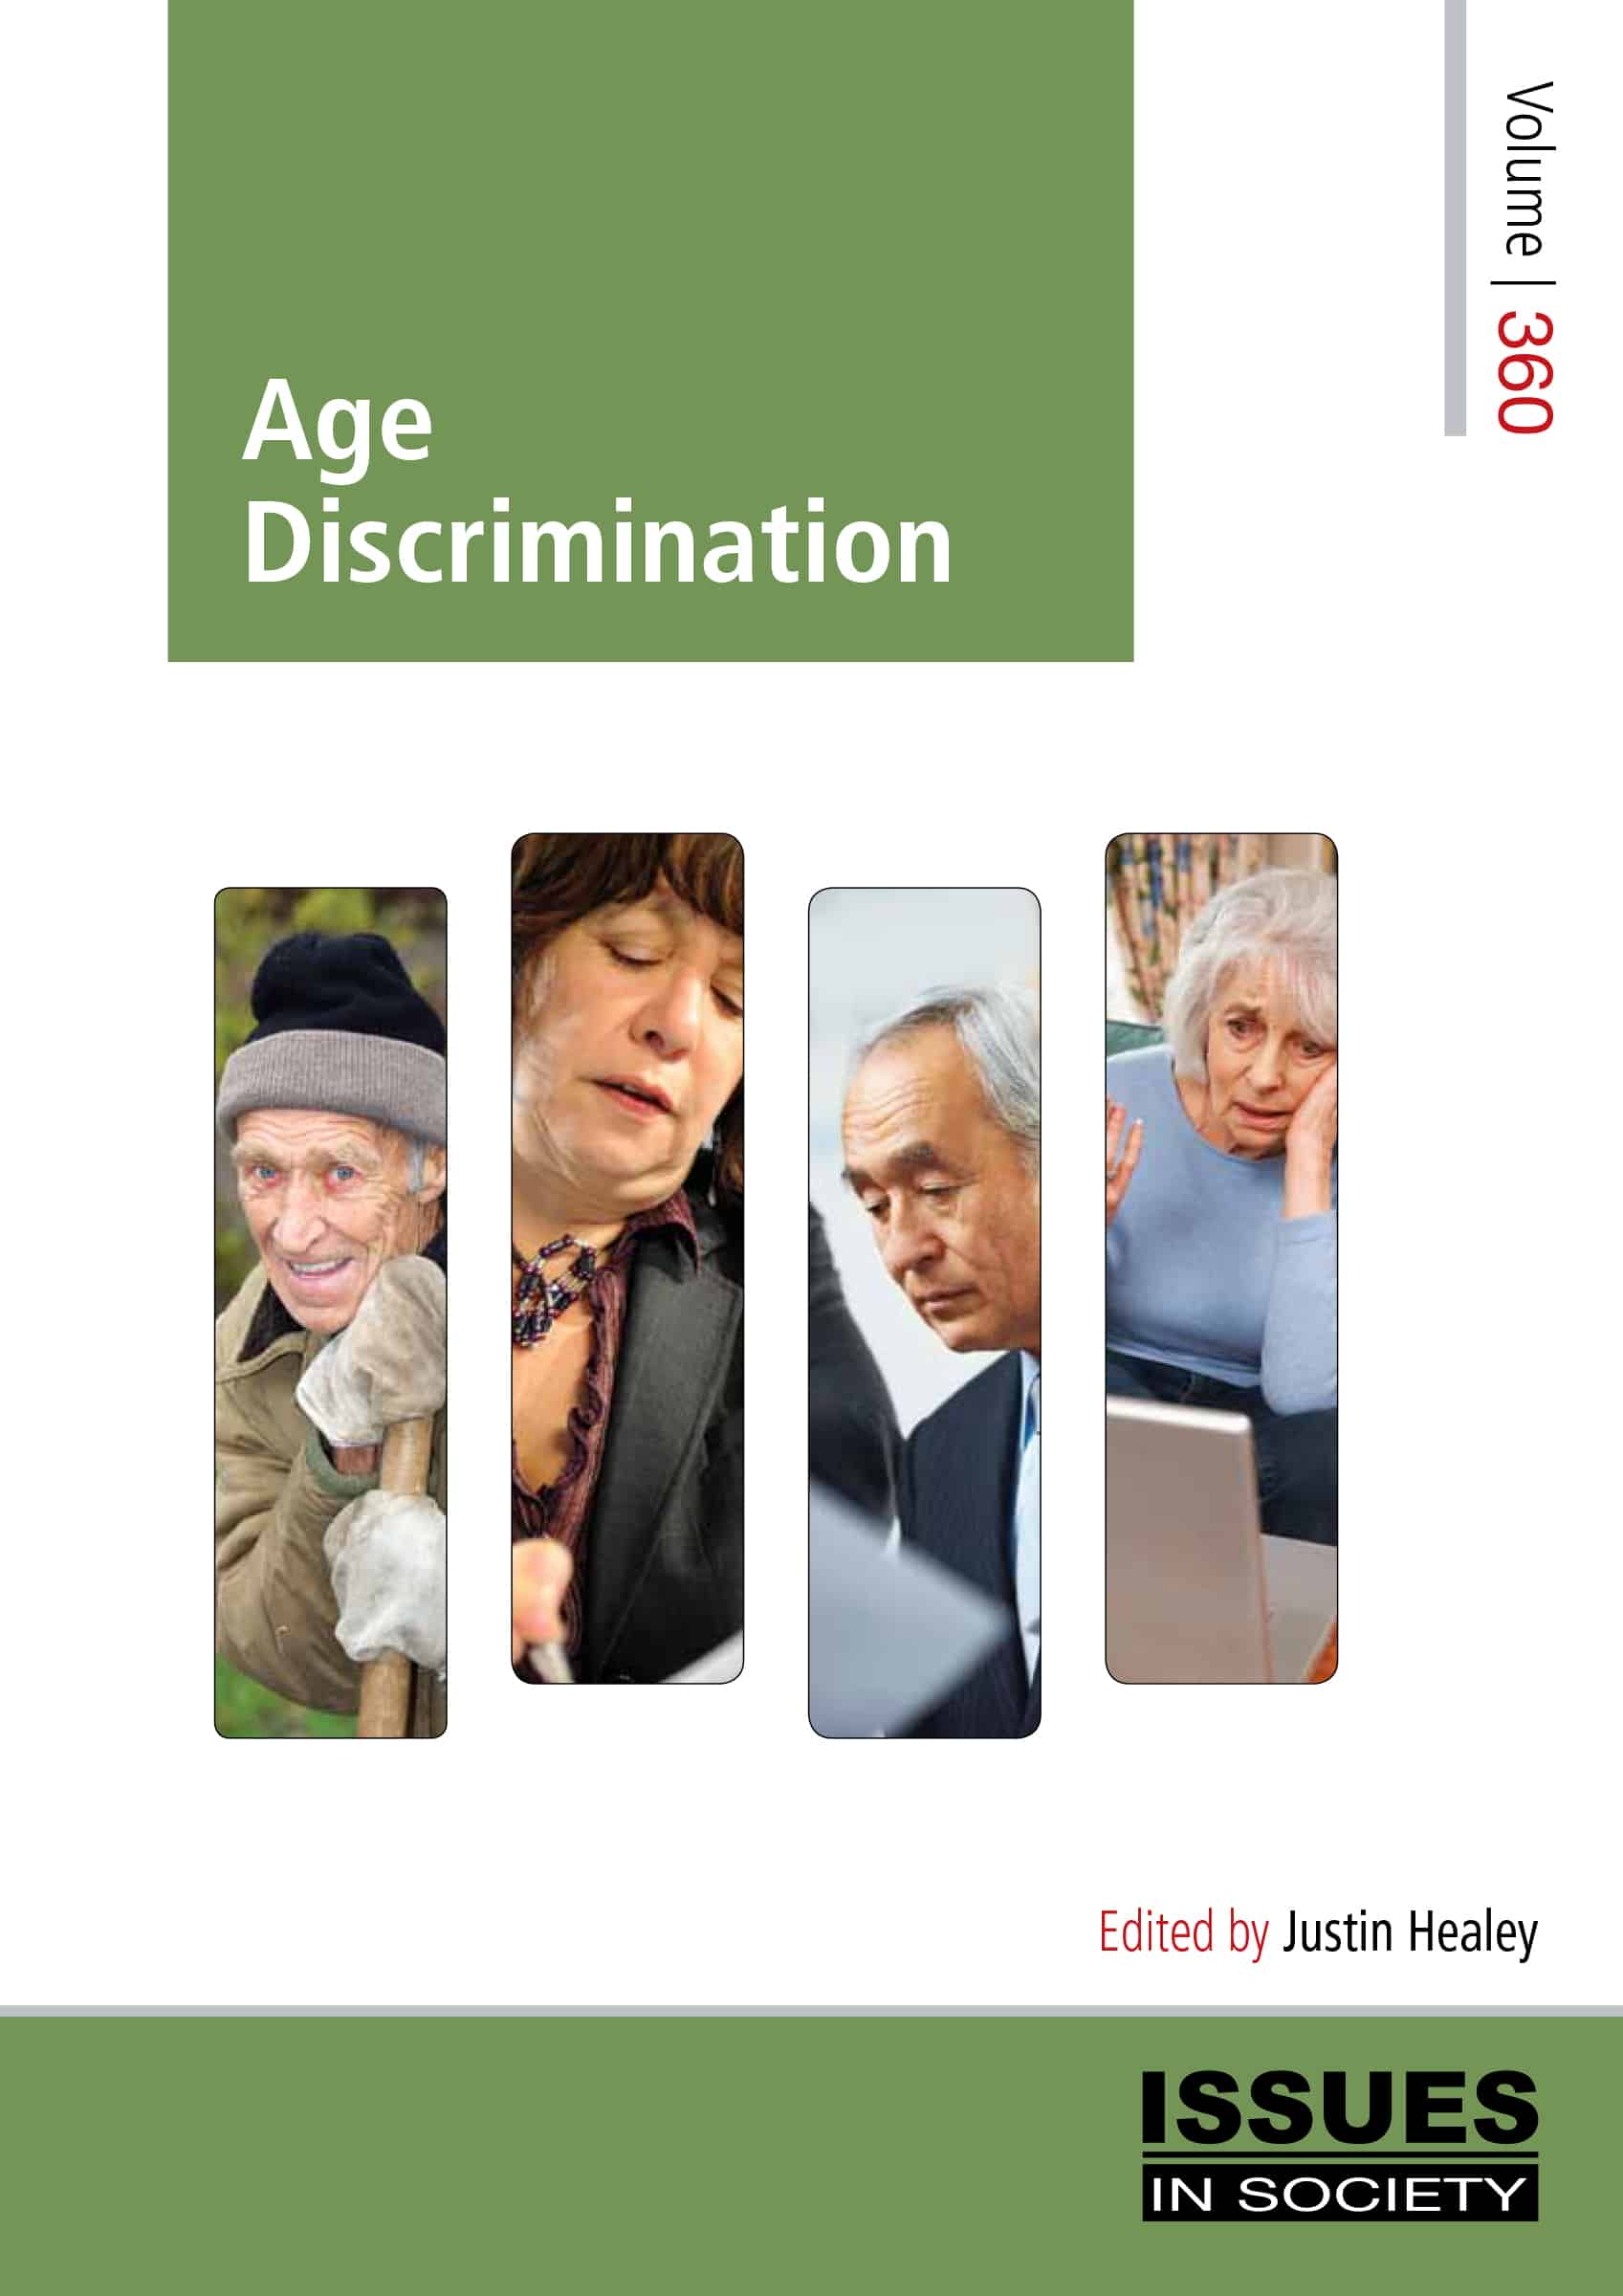 case study on age discrimination